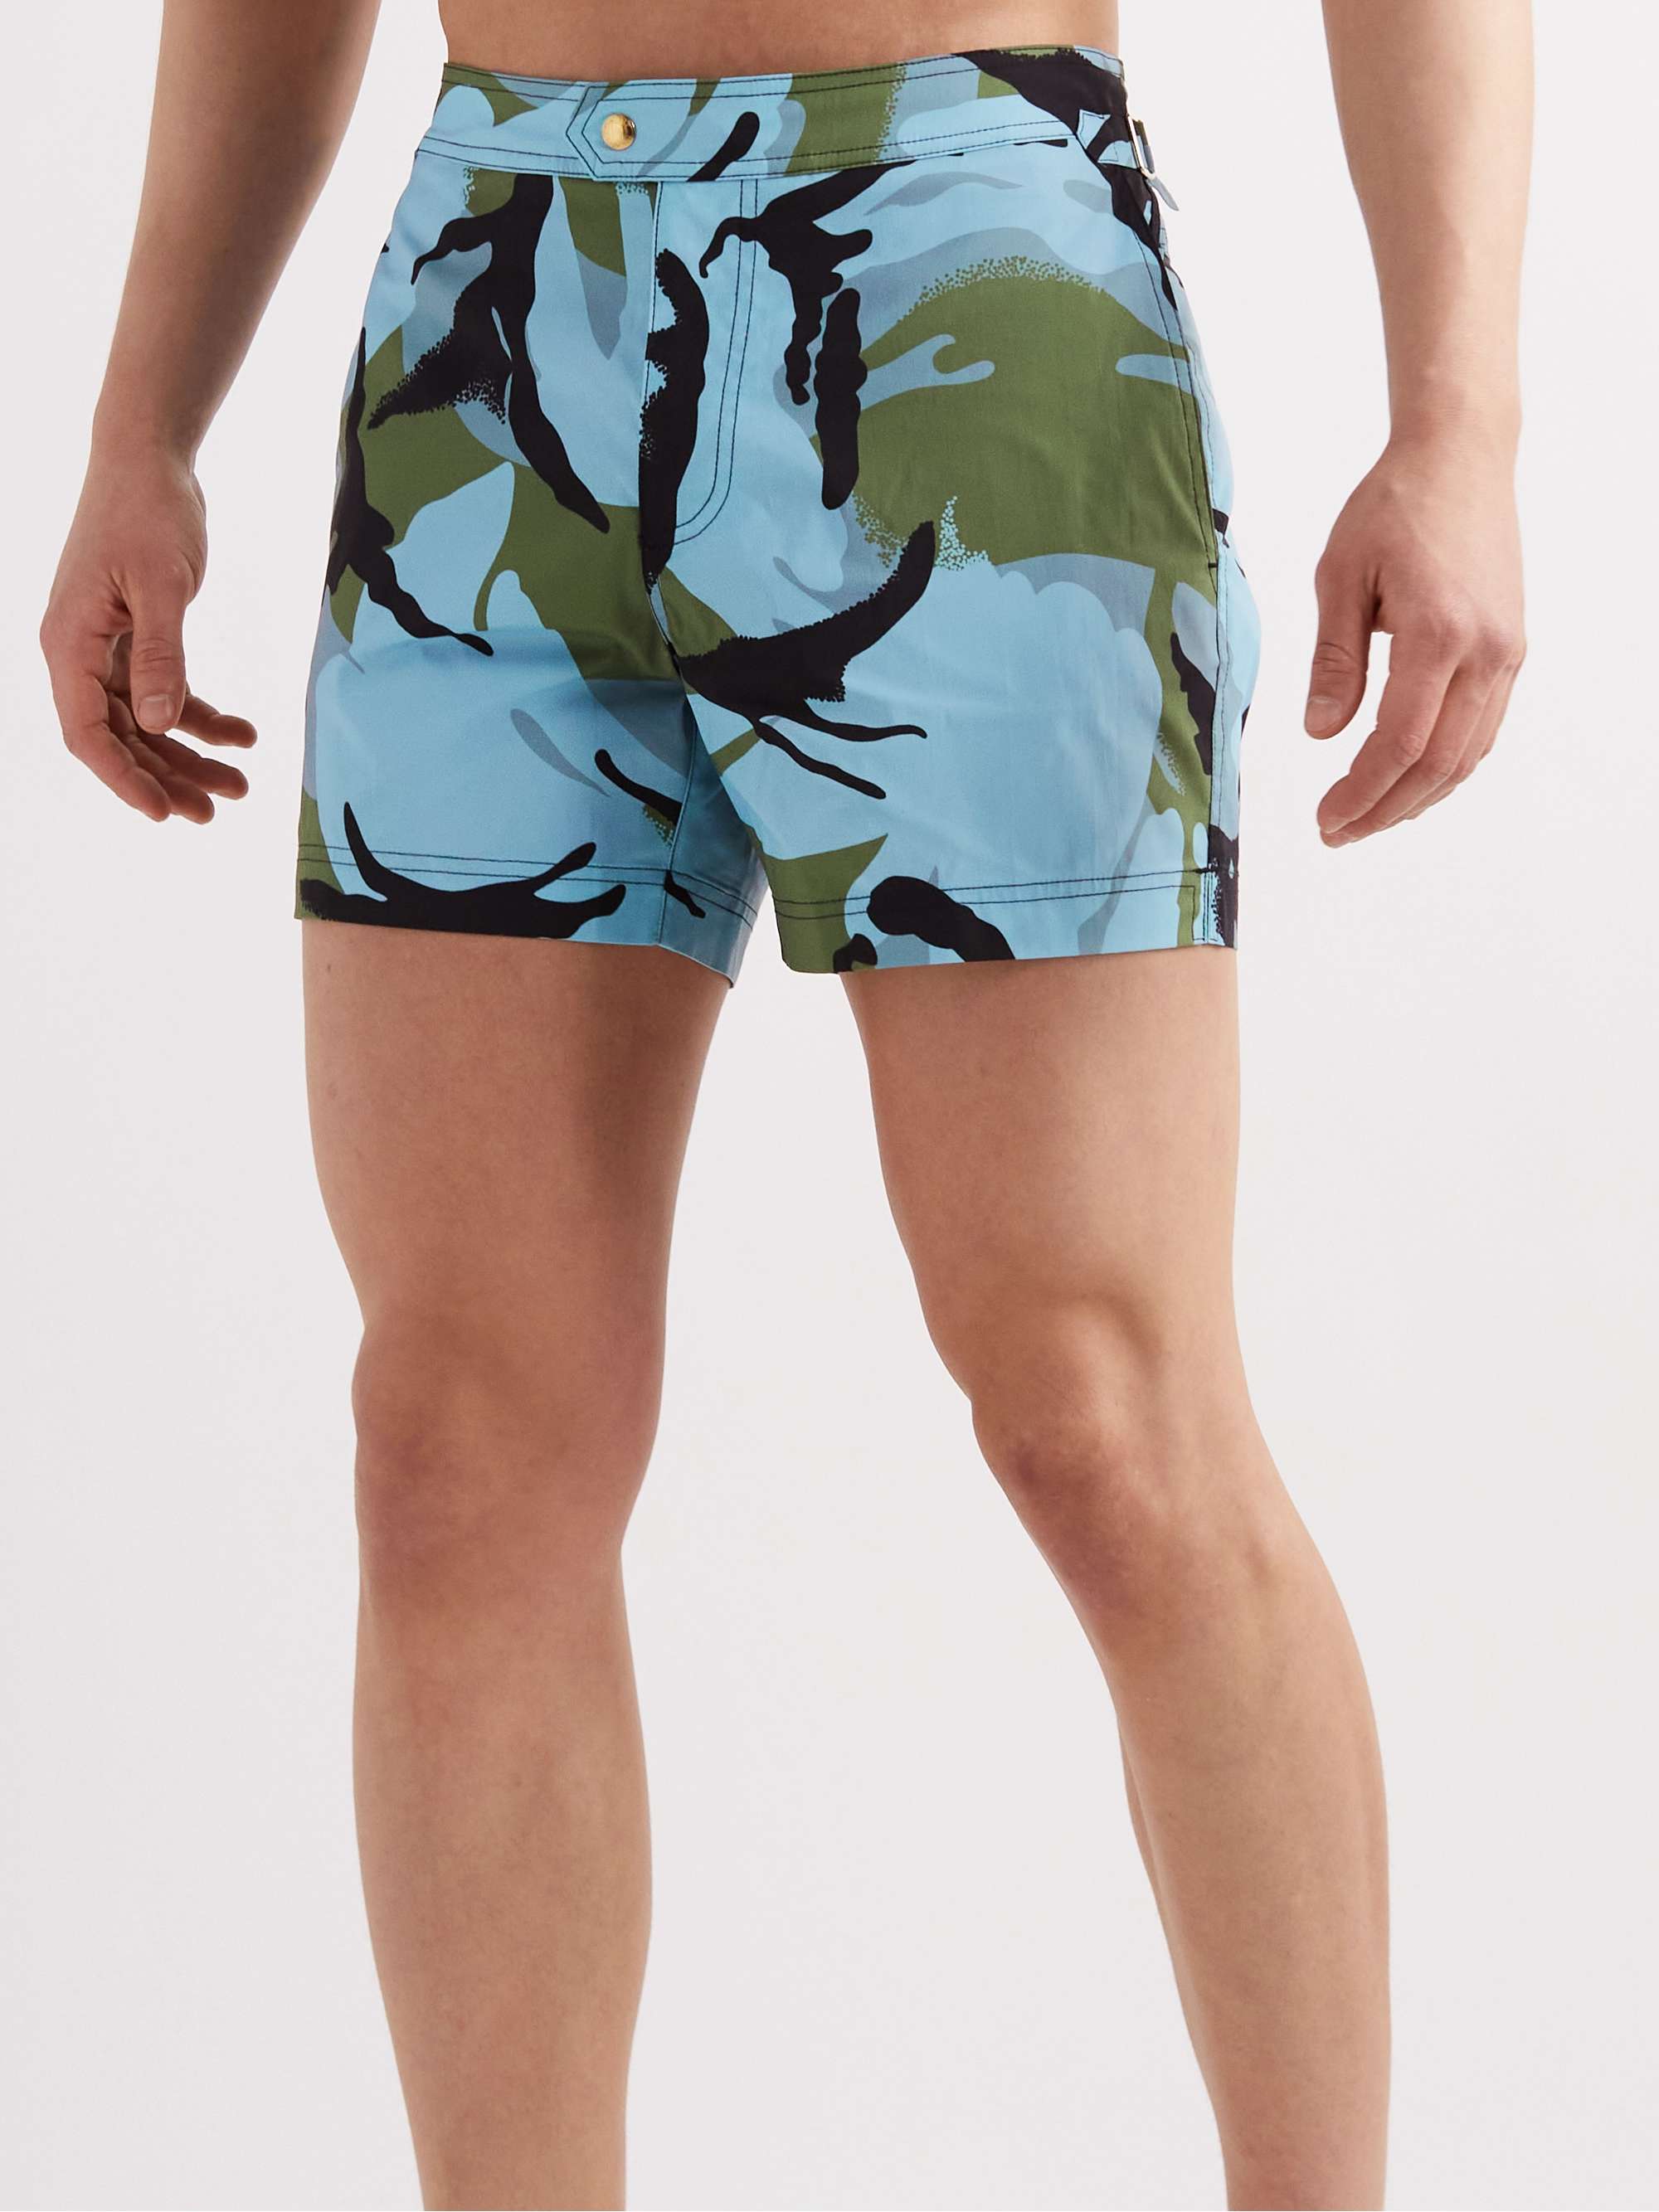 TOM FORD Slim-Fit Short-Length Printed Swim Shorts